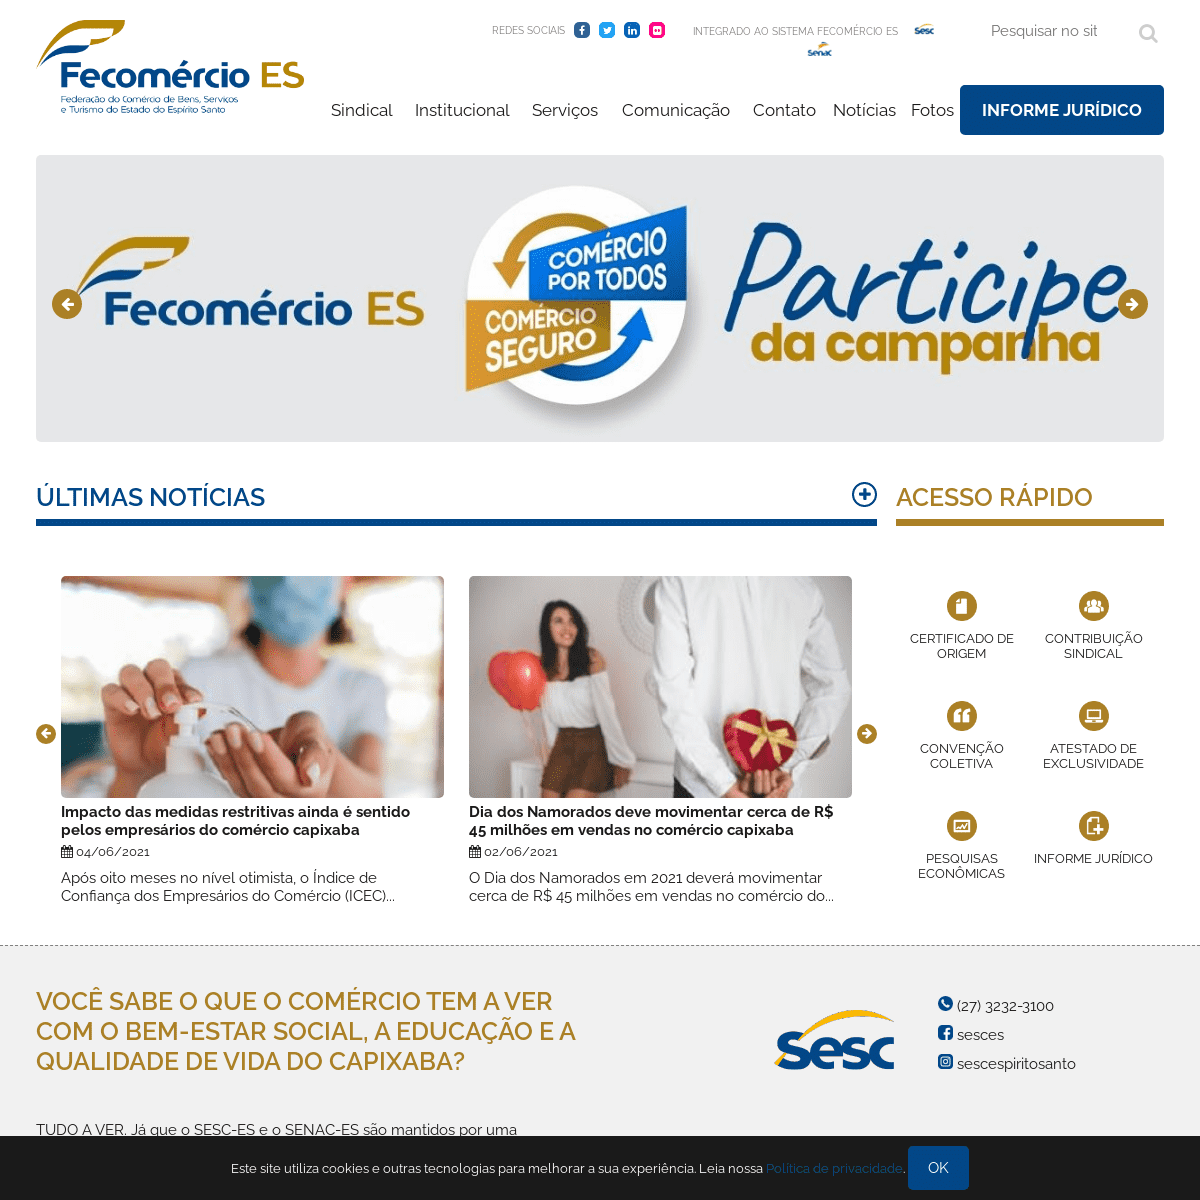 A complete backup of https://fecomercio-es.com.br